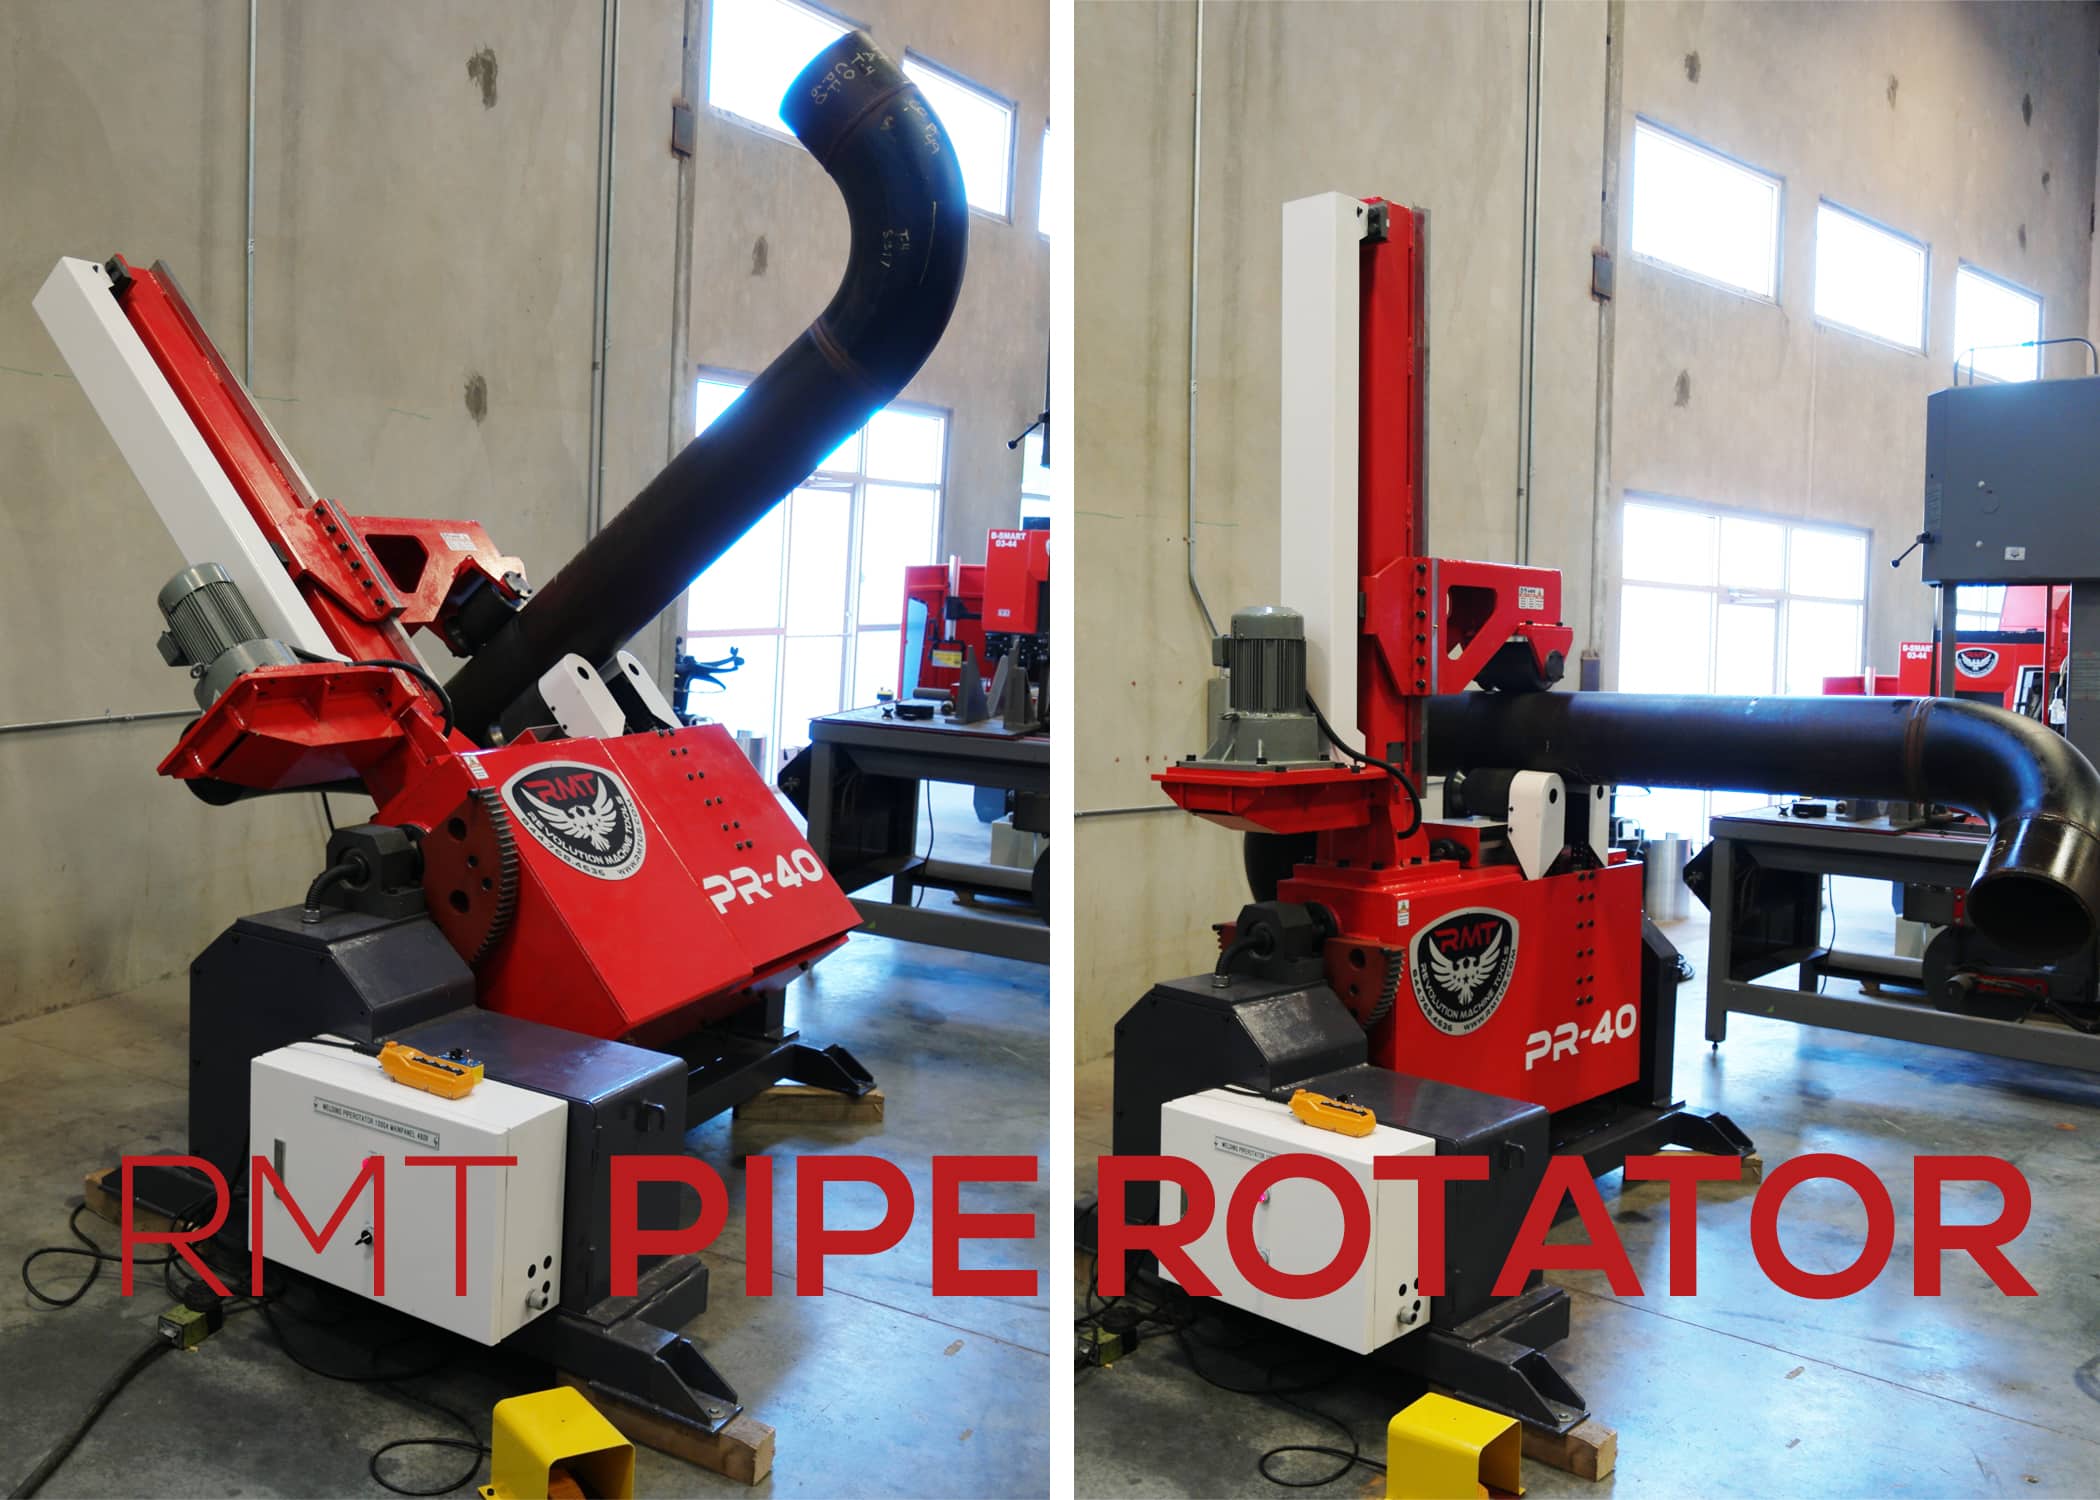 The RMT Pipe Rotator Advantage